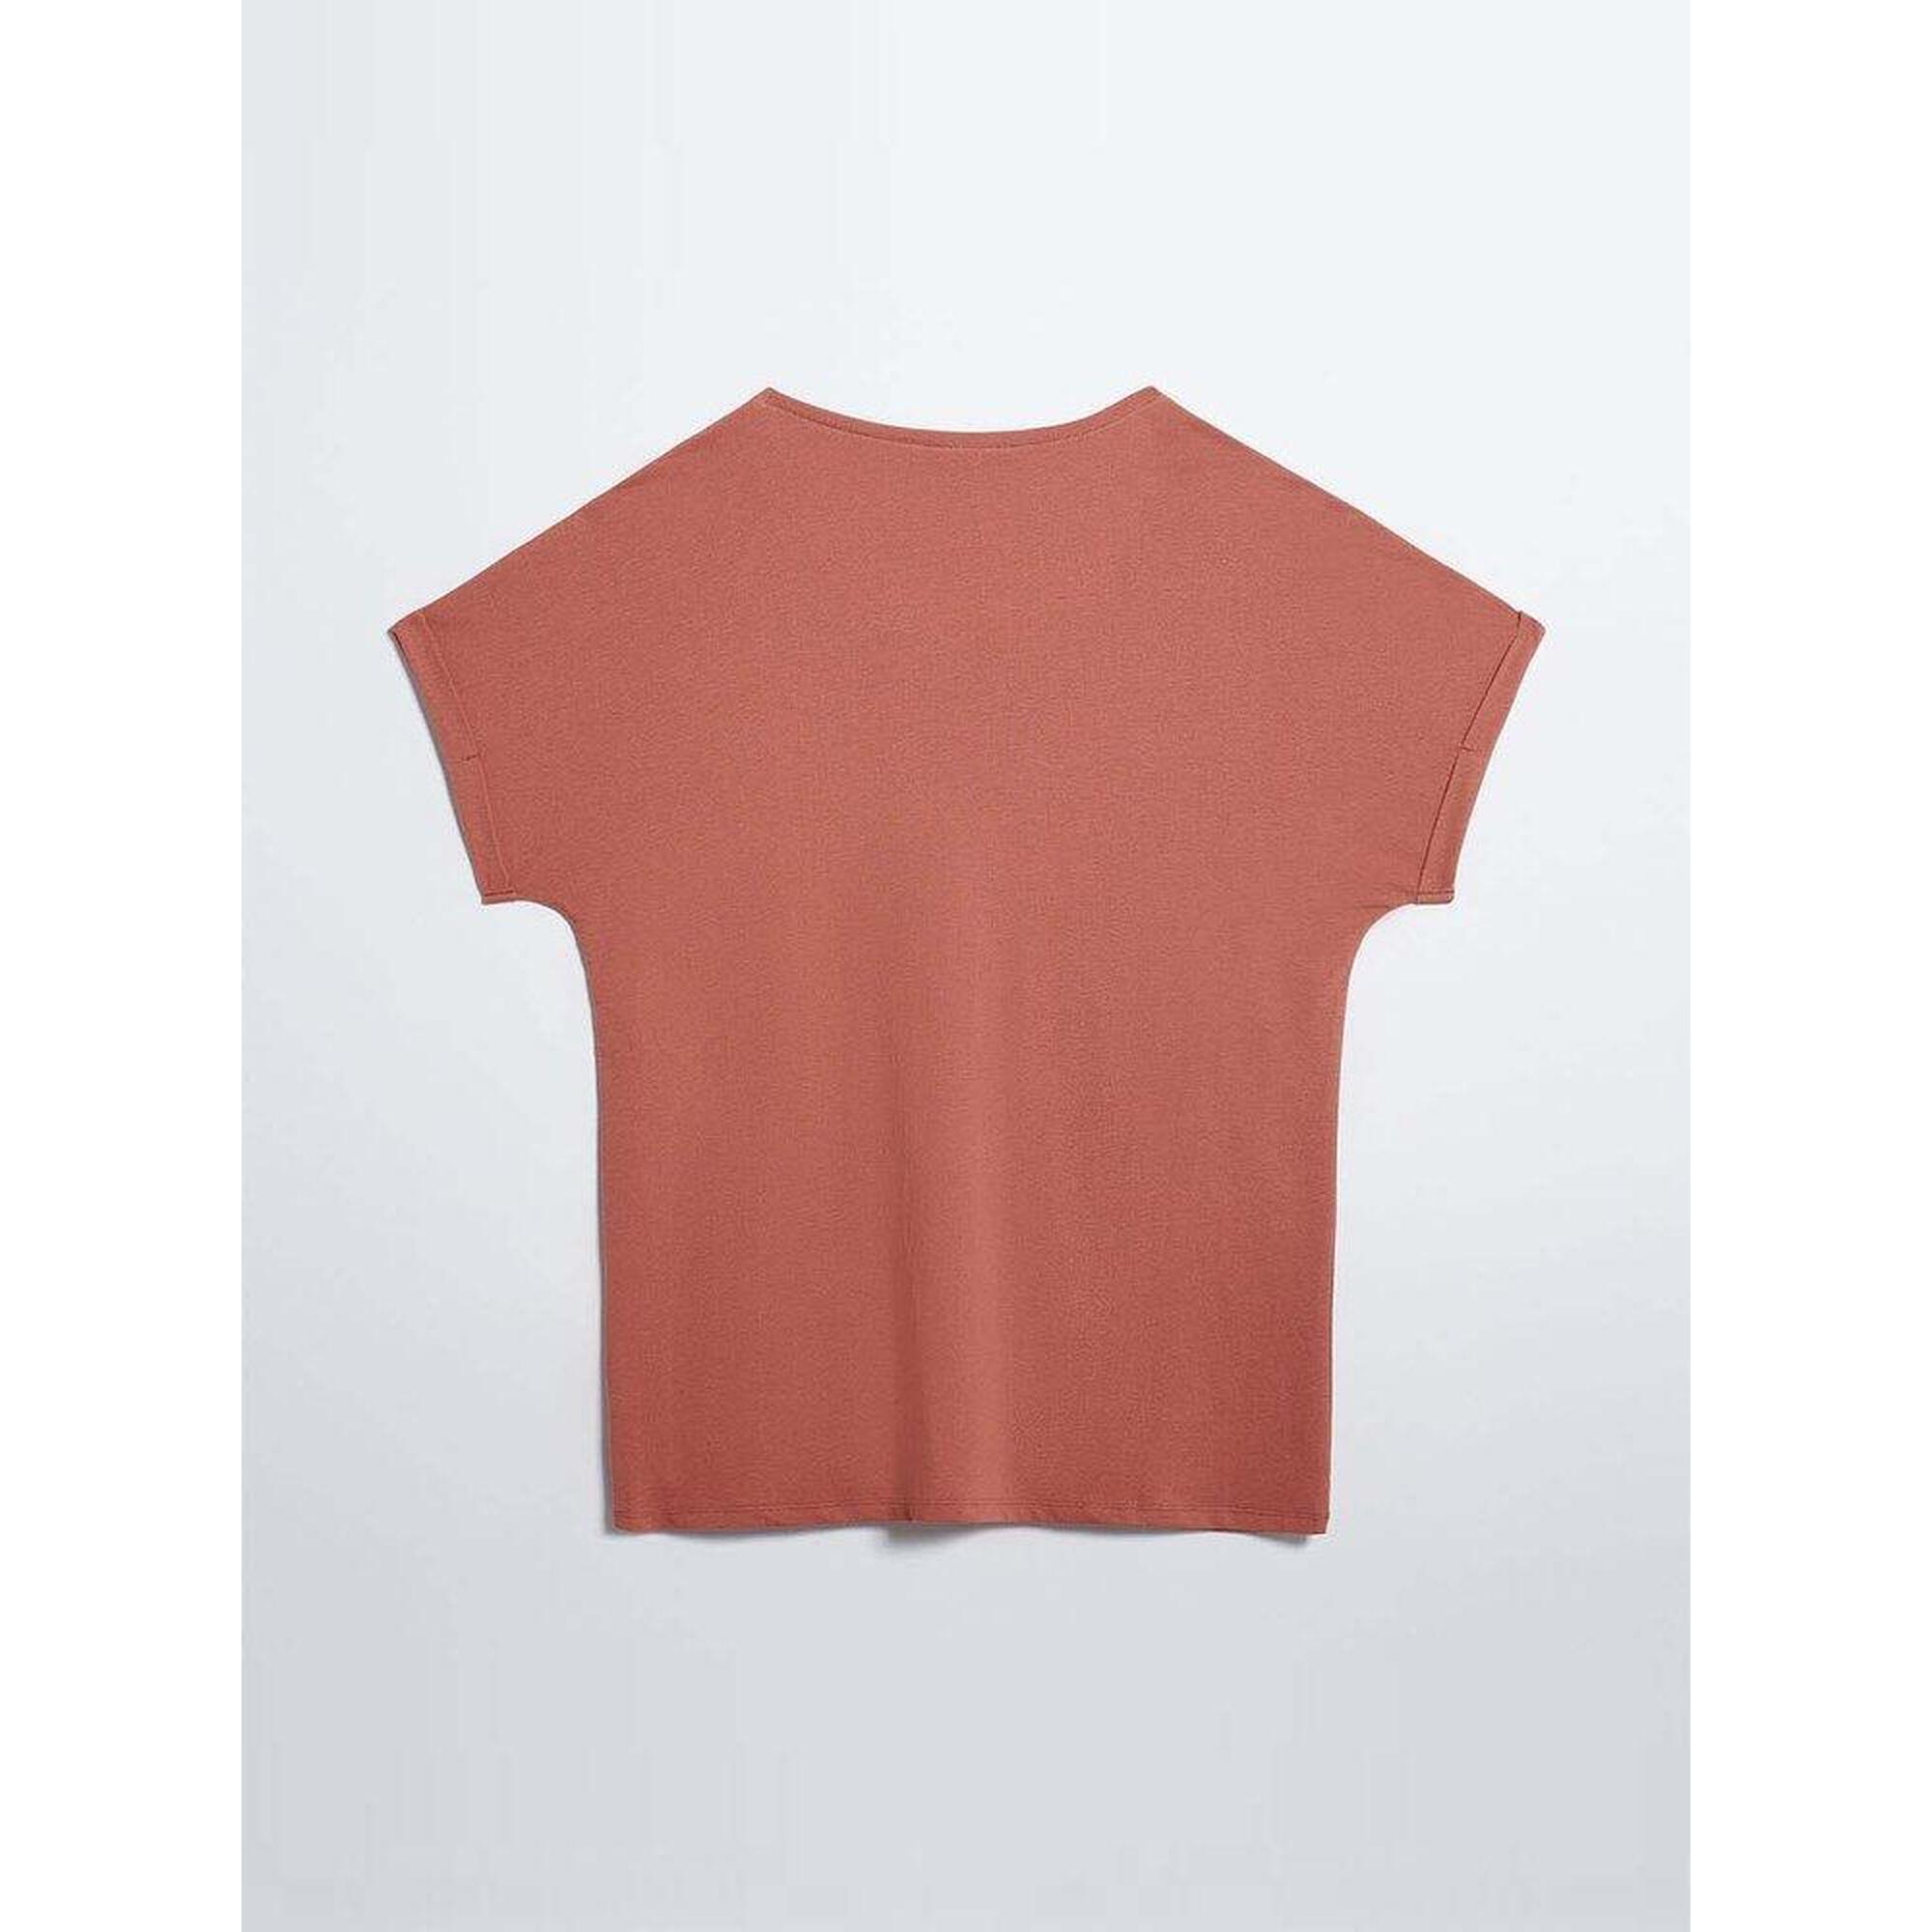 T-shirt manches courtes Femme - CLOVATEE Terracotta